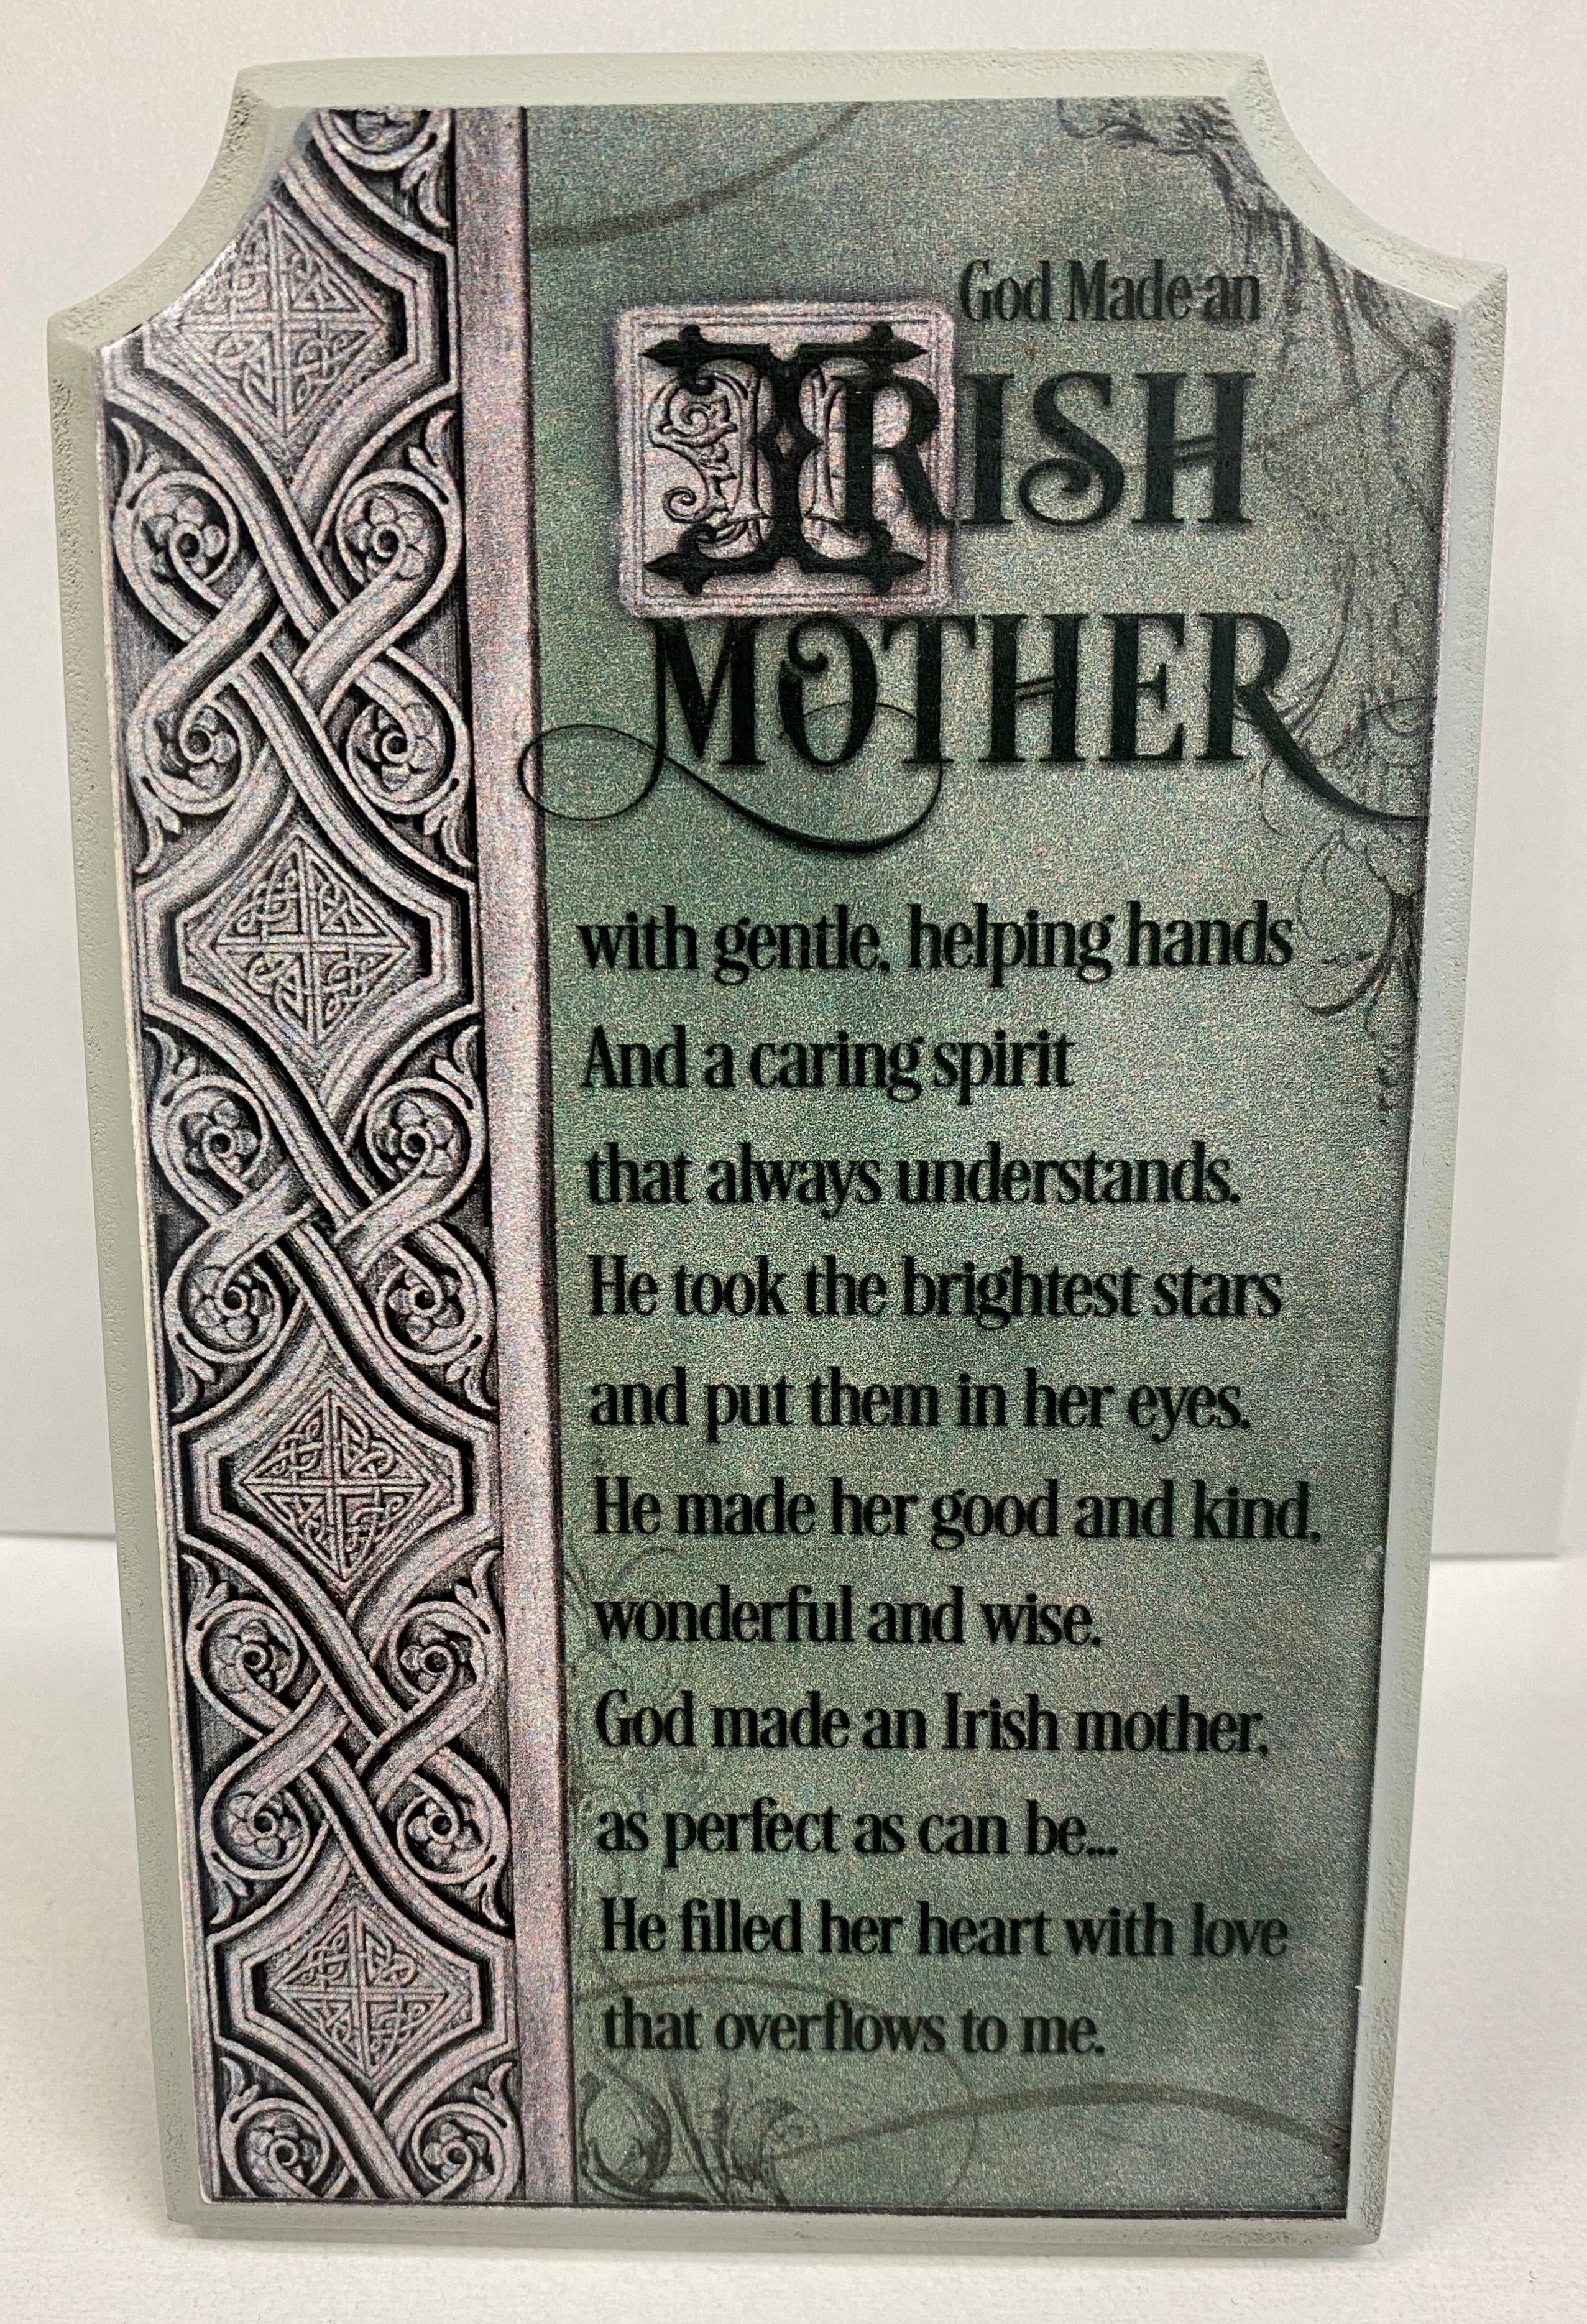 God made an Irish mother ...